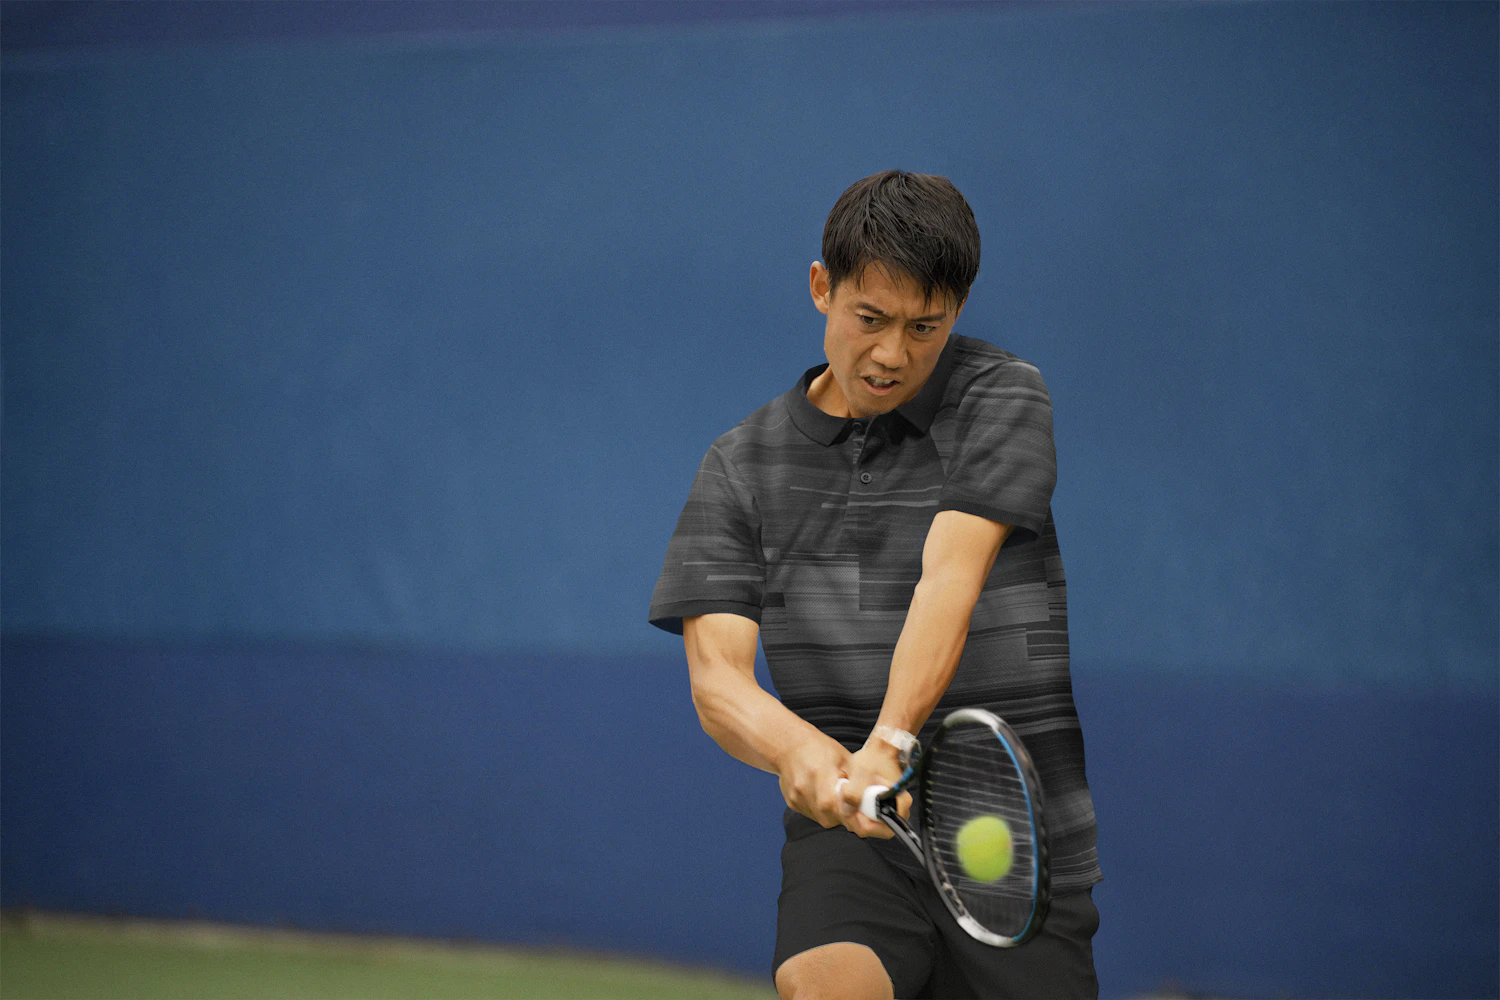 Tennis player Kei Nishikori